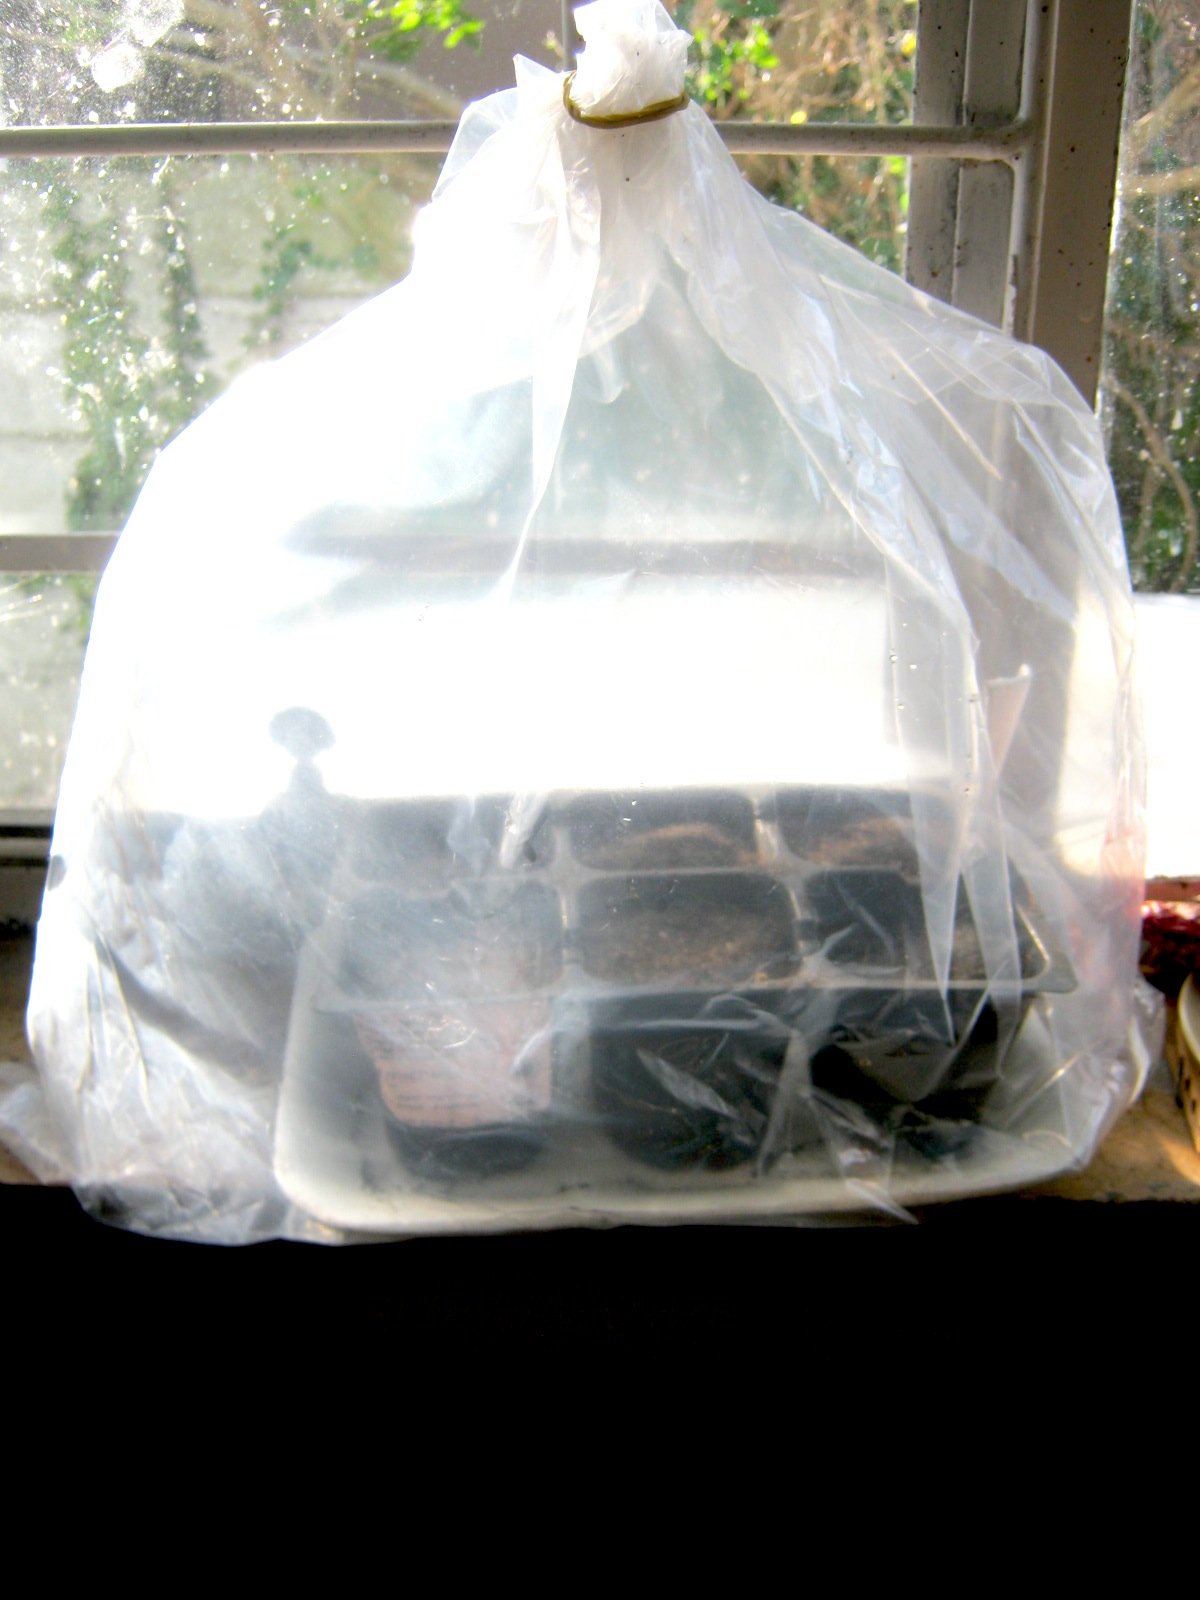 Carolina Reaper seeds in a plastic bag on window sill